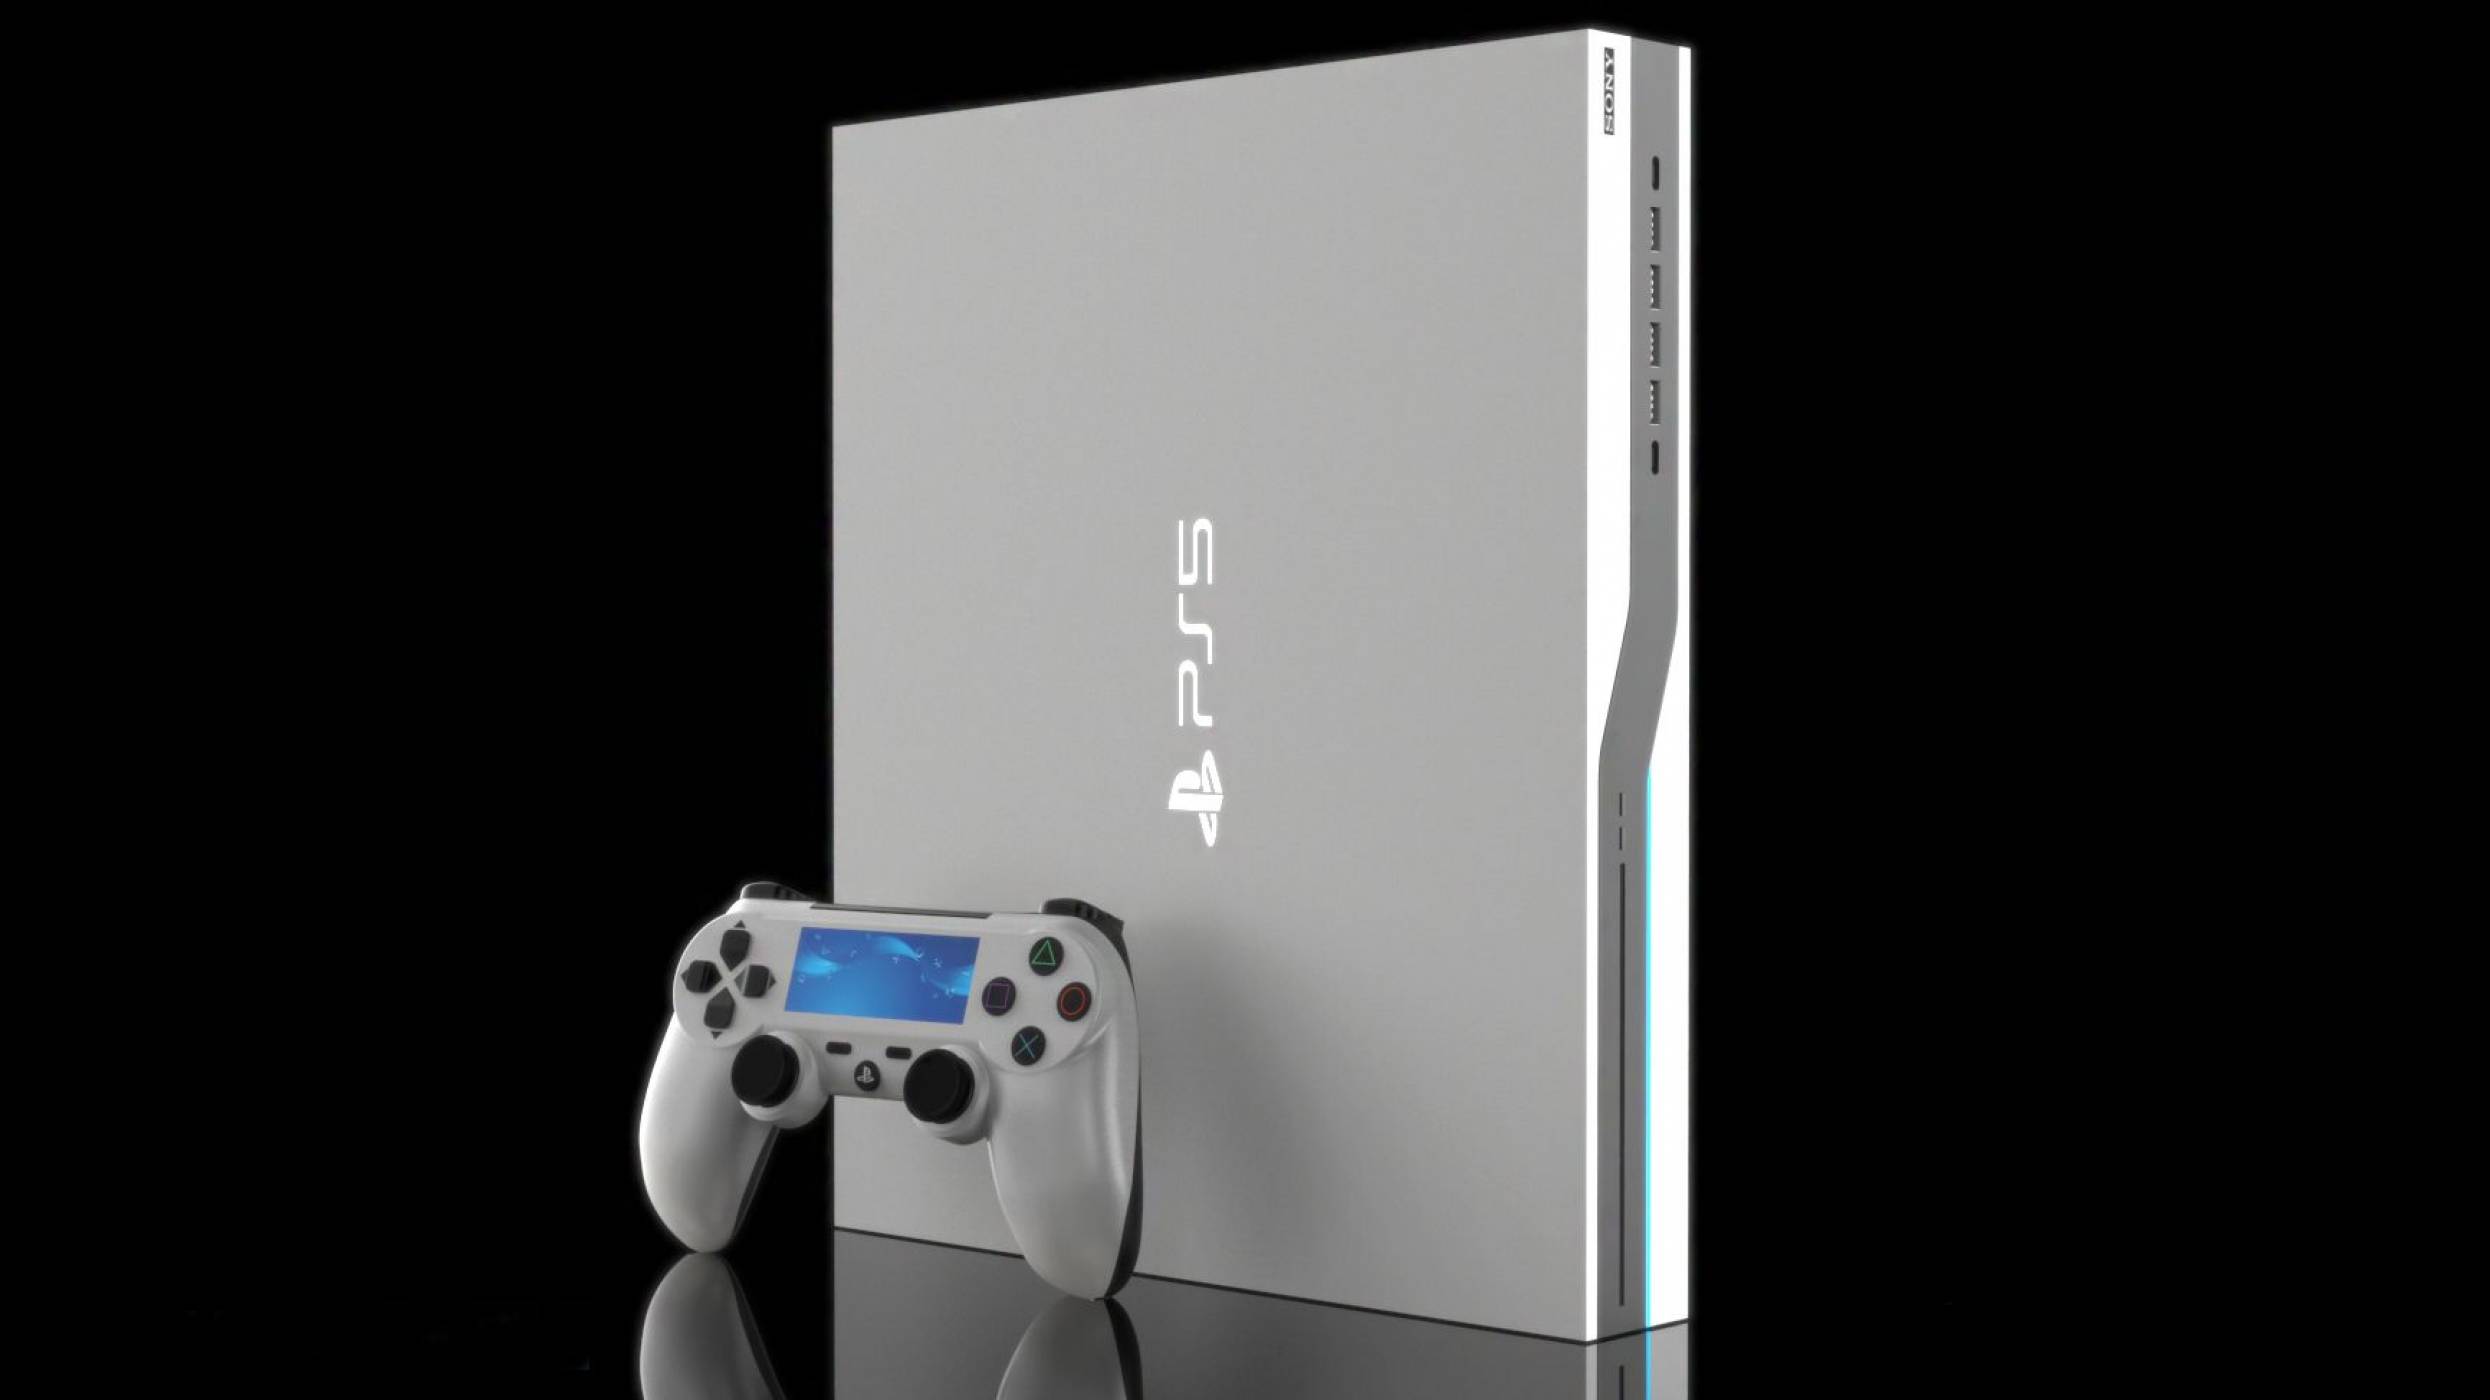 Sony playstation 5 digital edition обзоры